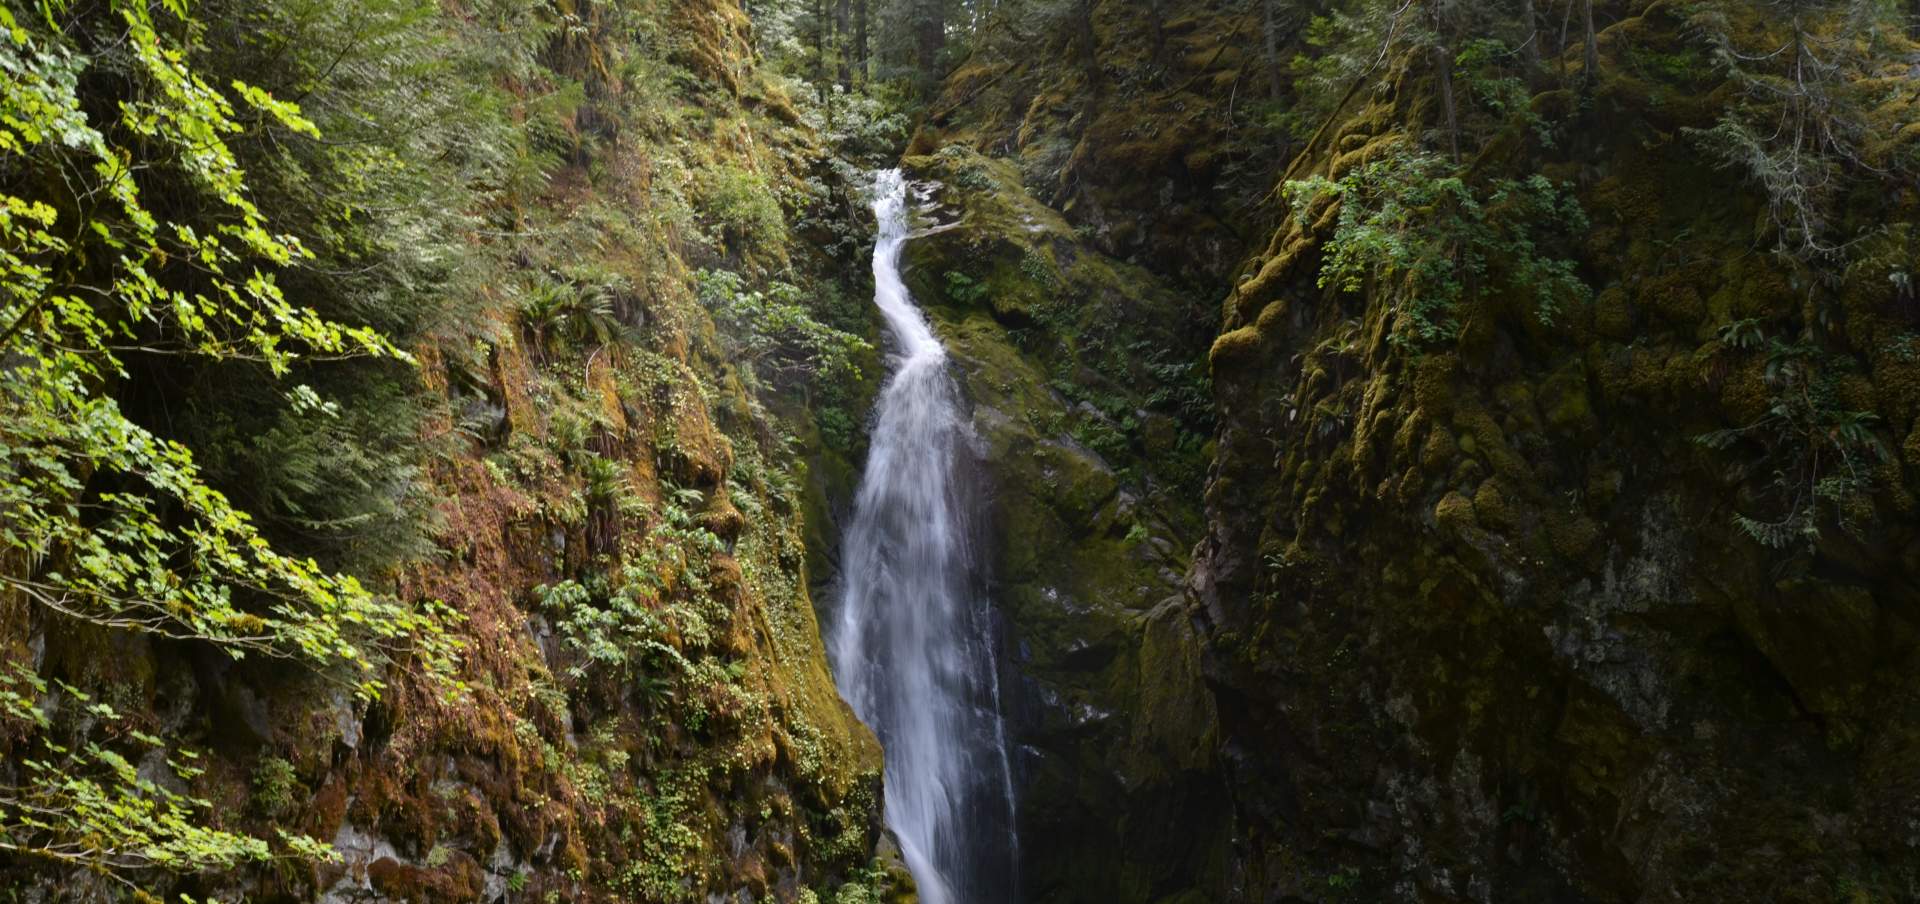 Cottage Grove Waterfalls Eugene, Cascades and Oregon Coast